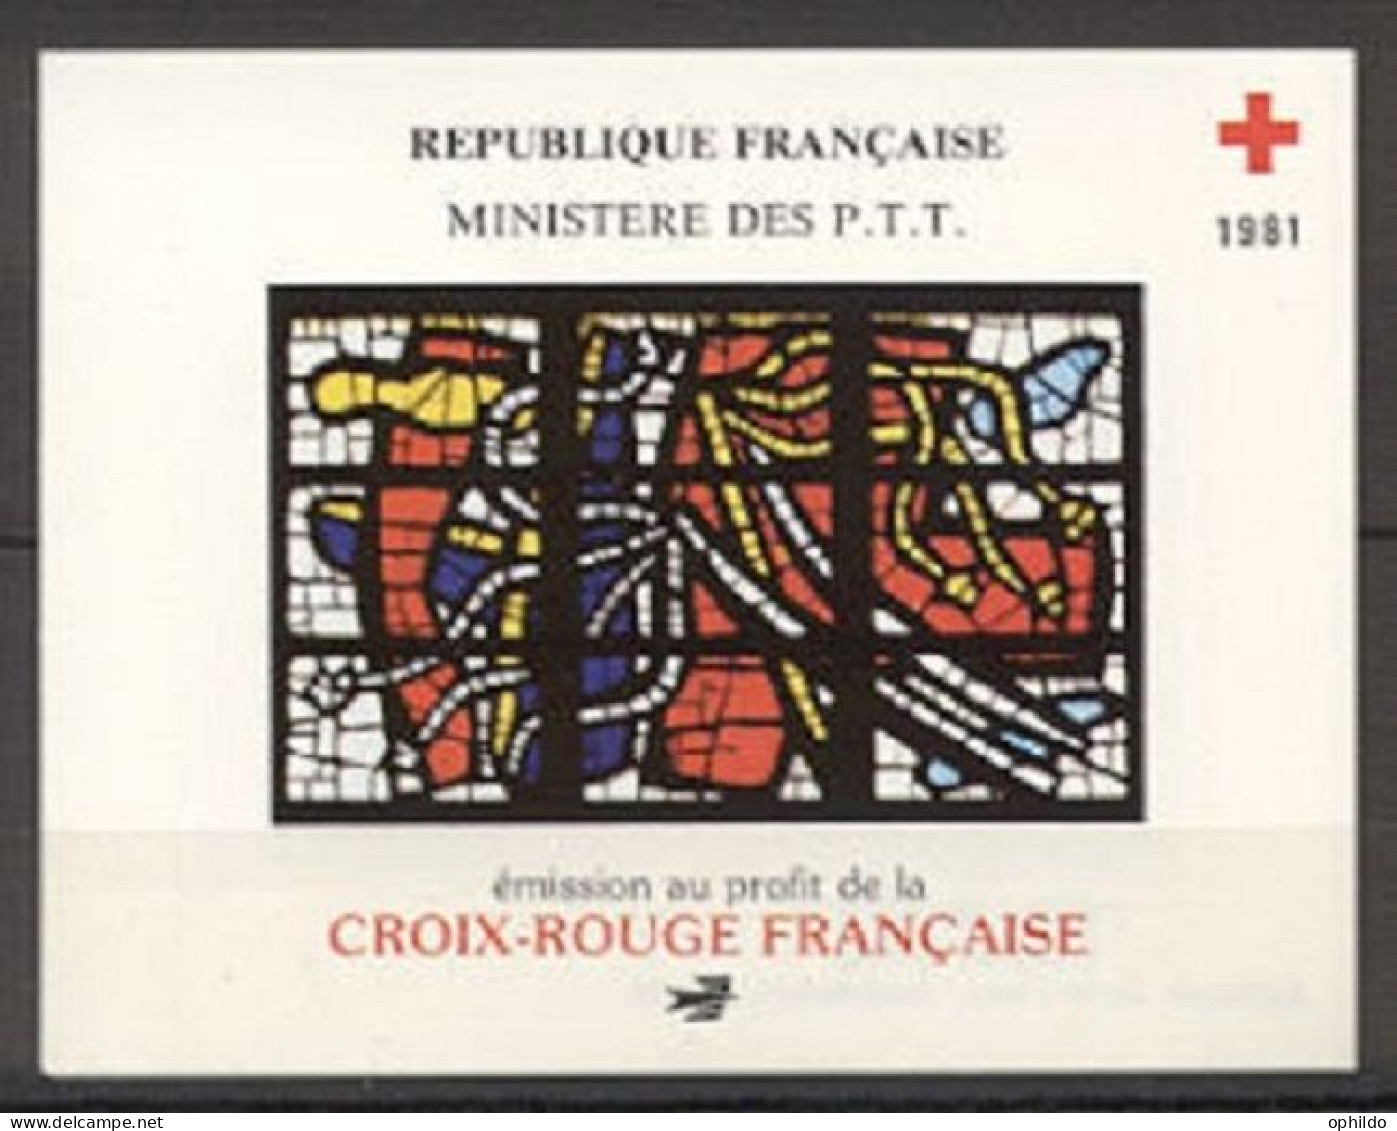 France Carnet 2030 Année 1981  * *   TB     - Red Cross